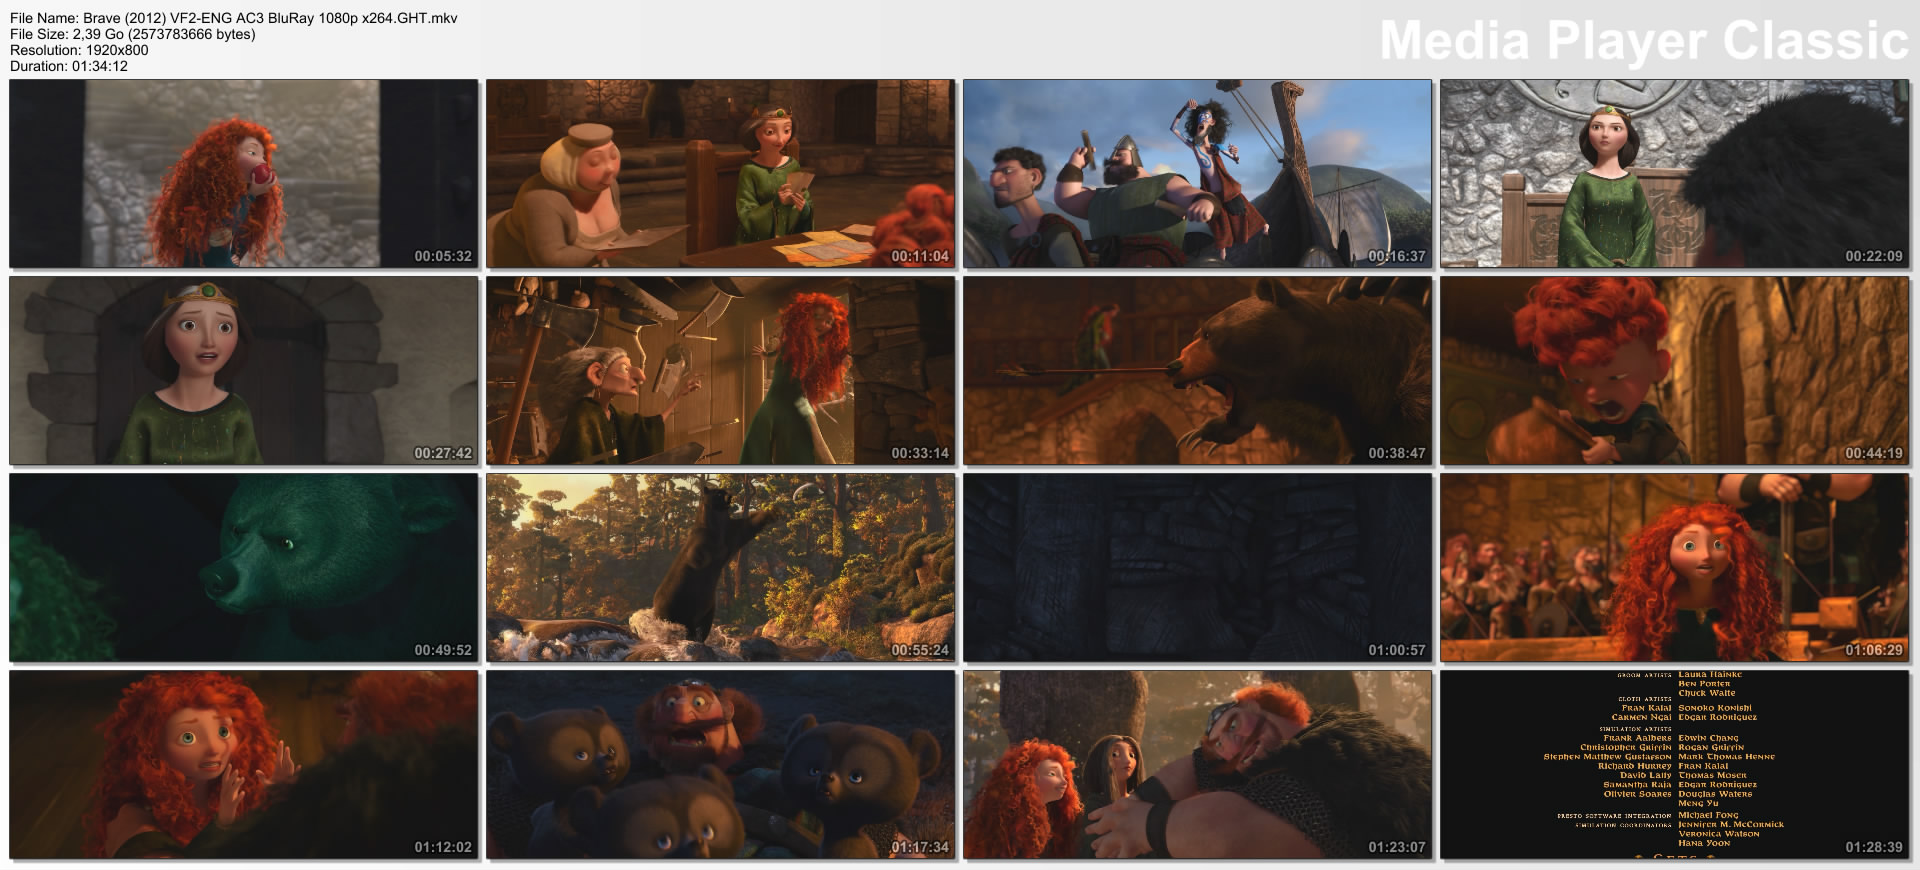 Brave (2012) VF2-ENG AC3 BluRay 1080p x264.GHT